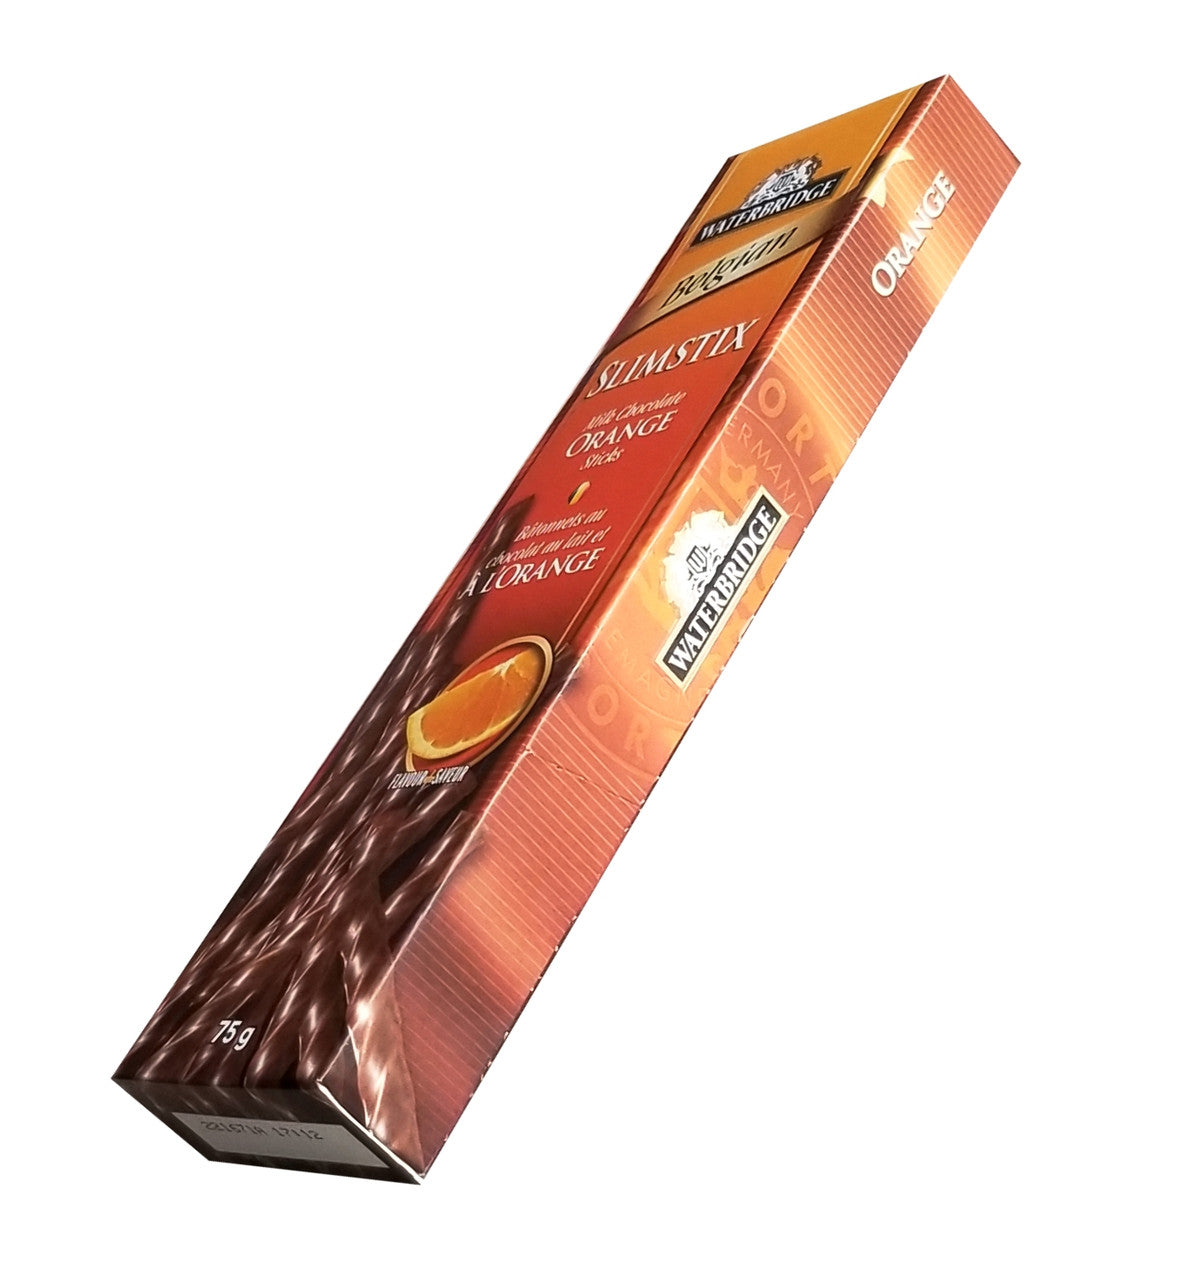 Milk Chocolate Orange Sticks